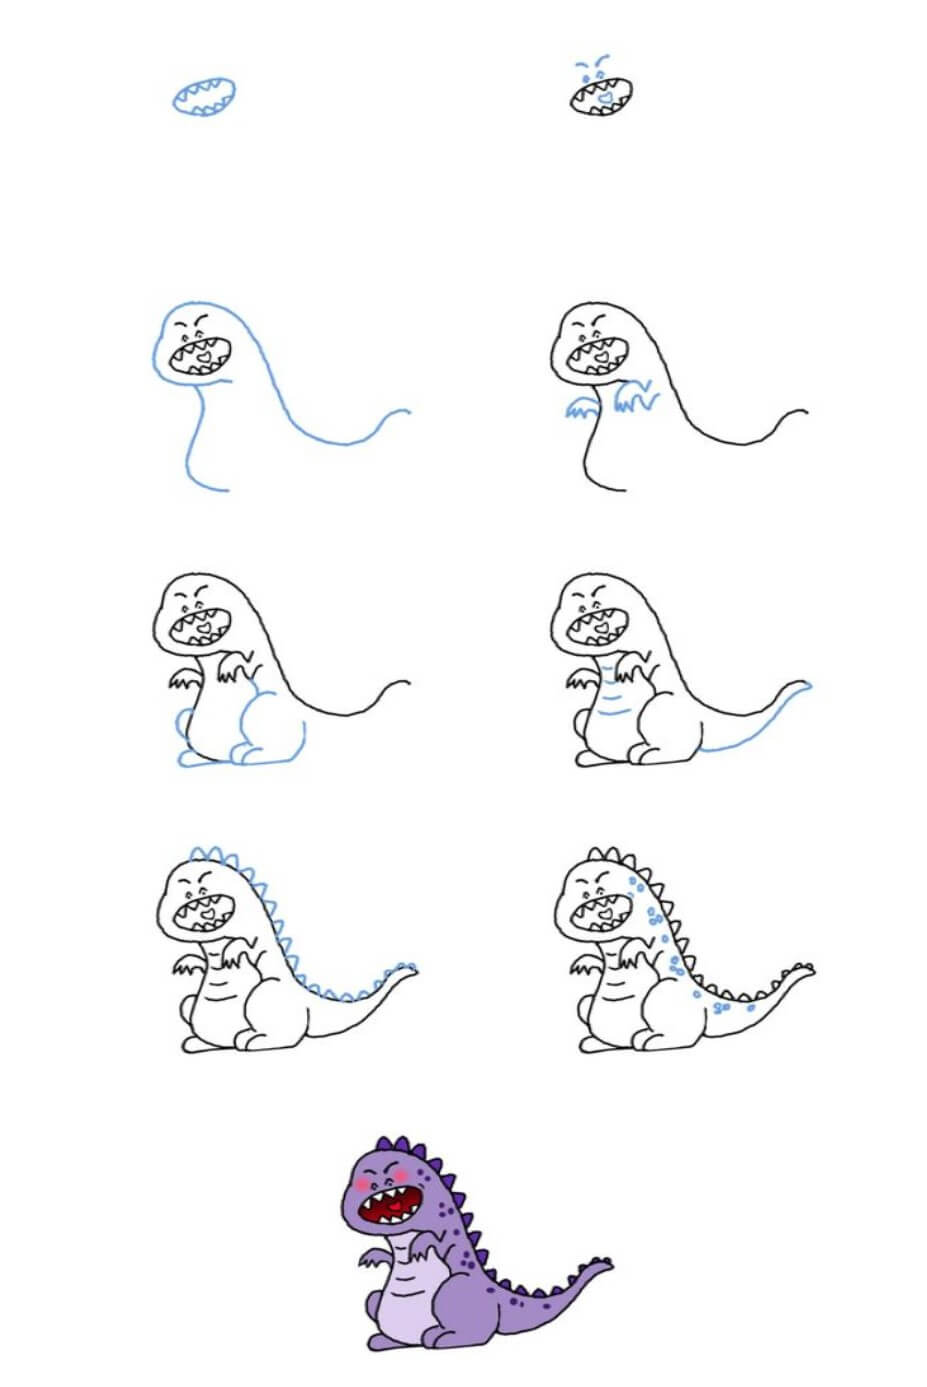 Godzilla idea (7) Drawing Ideas